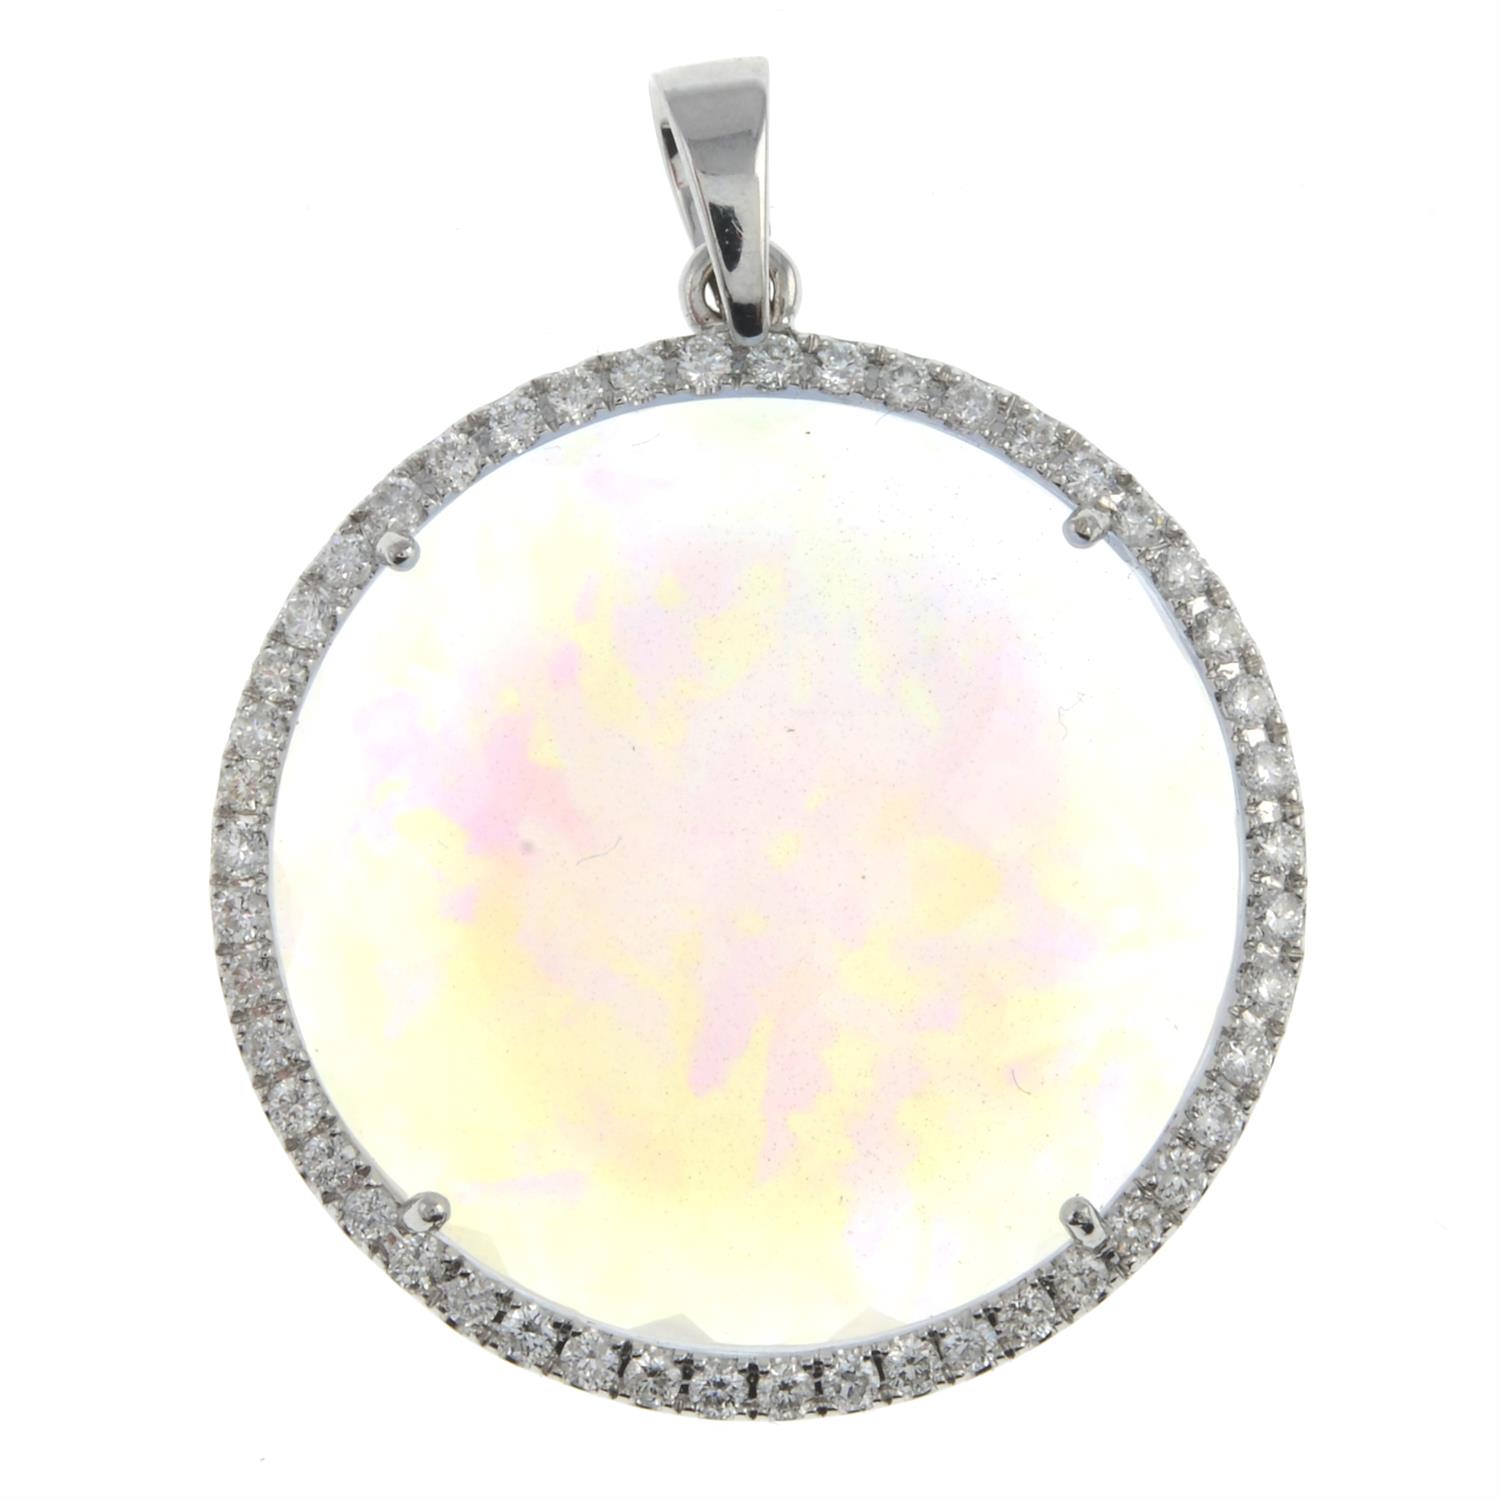 Opal diamond pendant